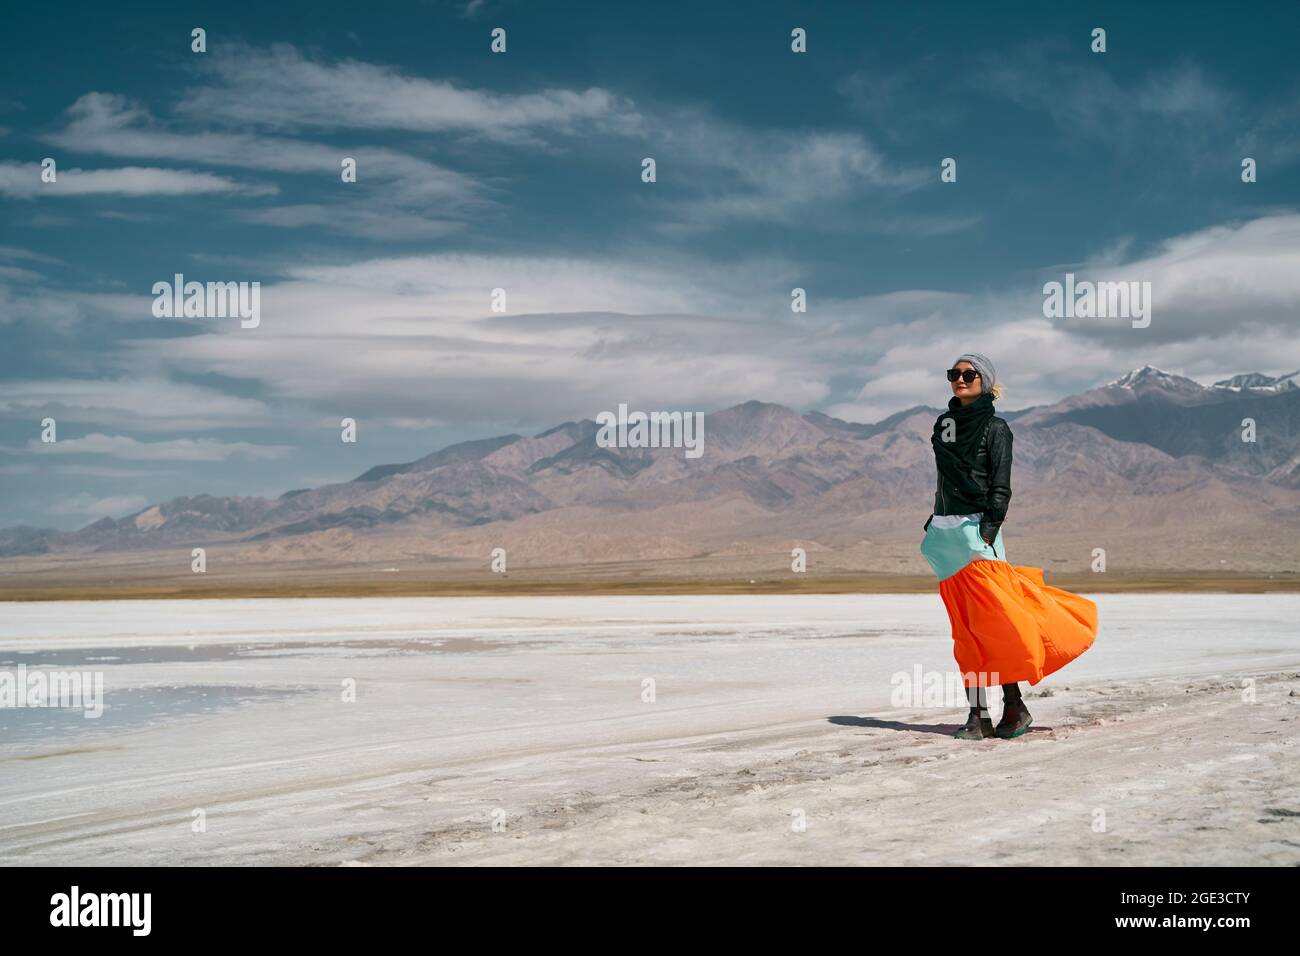 asian woman female tourist in long skirt standing on saline alkali land Stock Photo